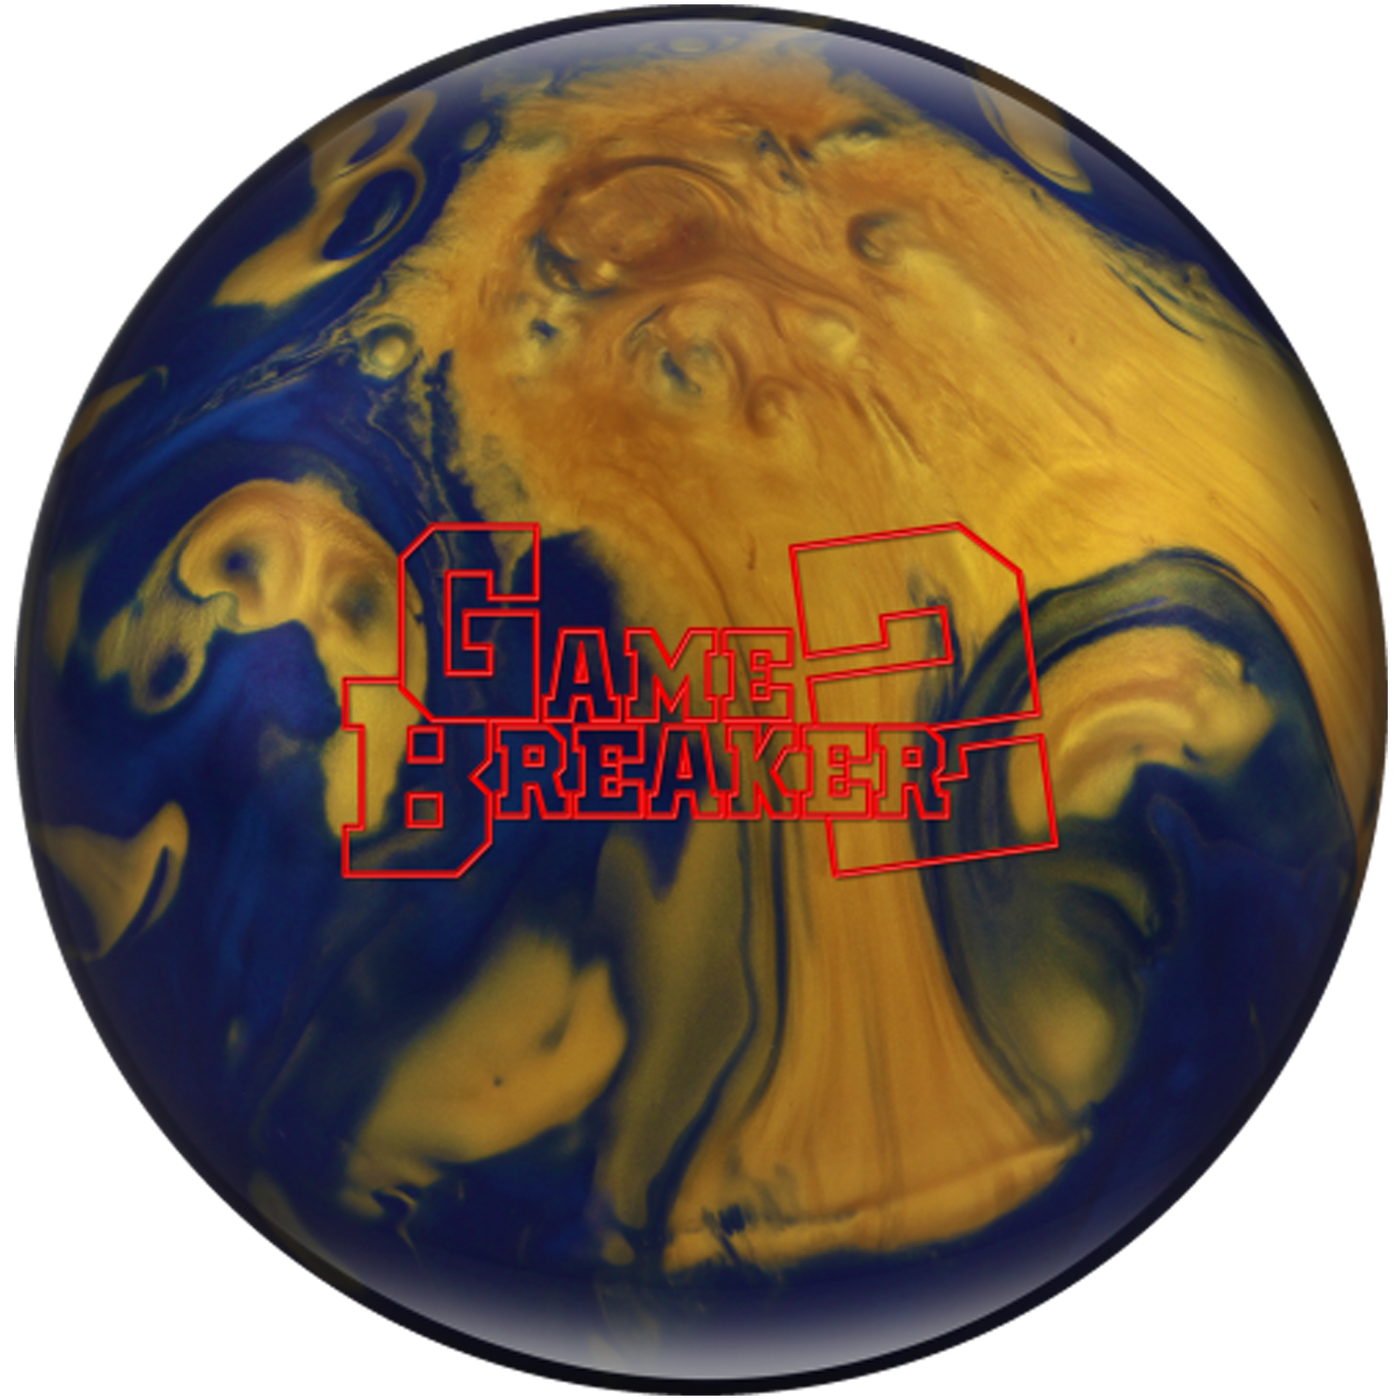 Game Breaker 2 Gold Bowling Ball